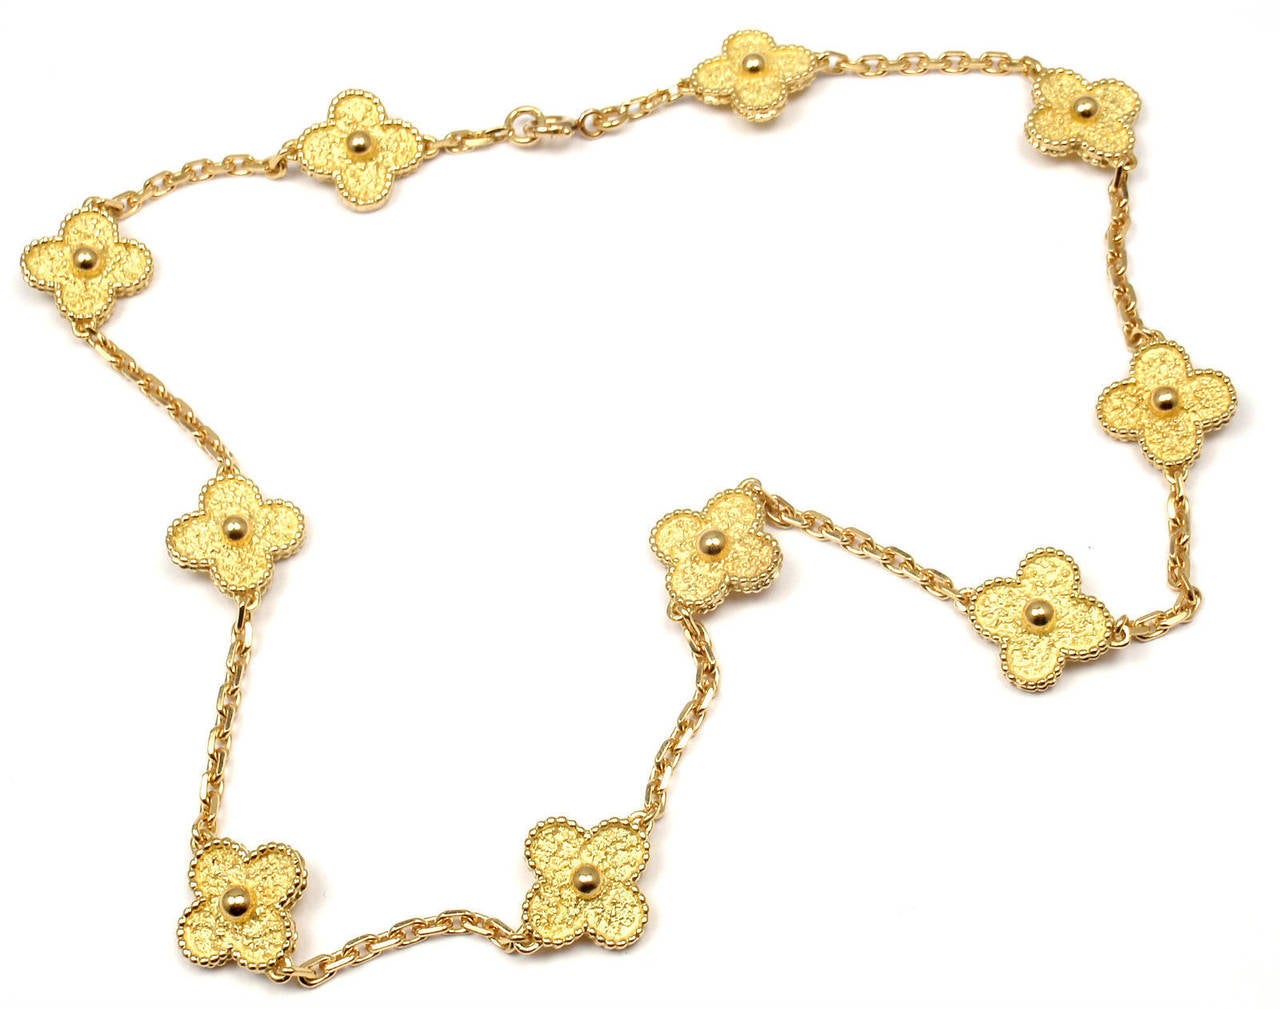 18k Yellow Gold Vintage Alhambra 10 Motif Necklace by Van Cleef & Arpels.

Details:
Length: 16